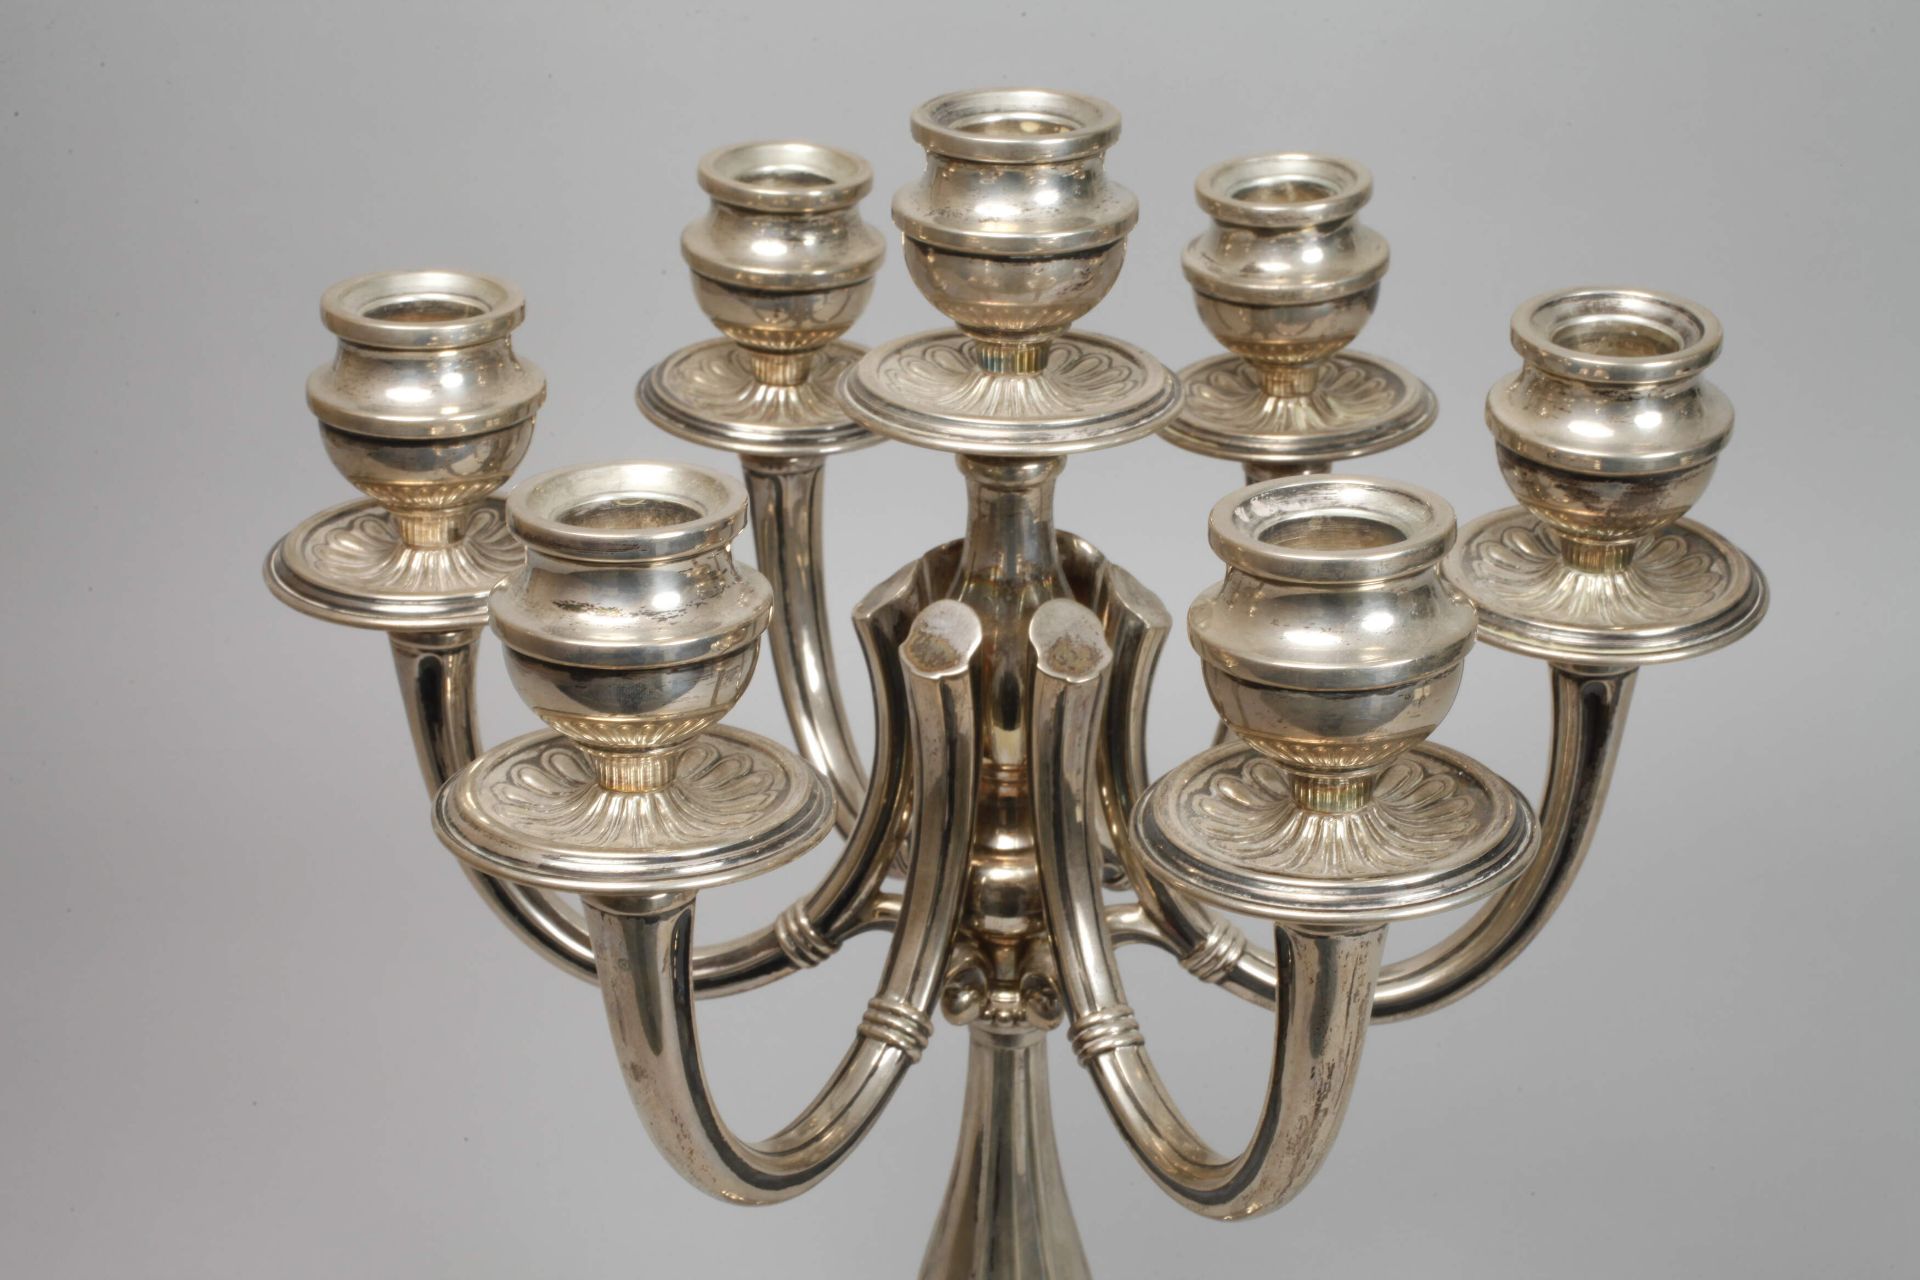 Seven-armed candelabra, silver - Image 2 of 5